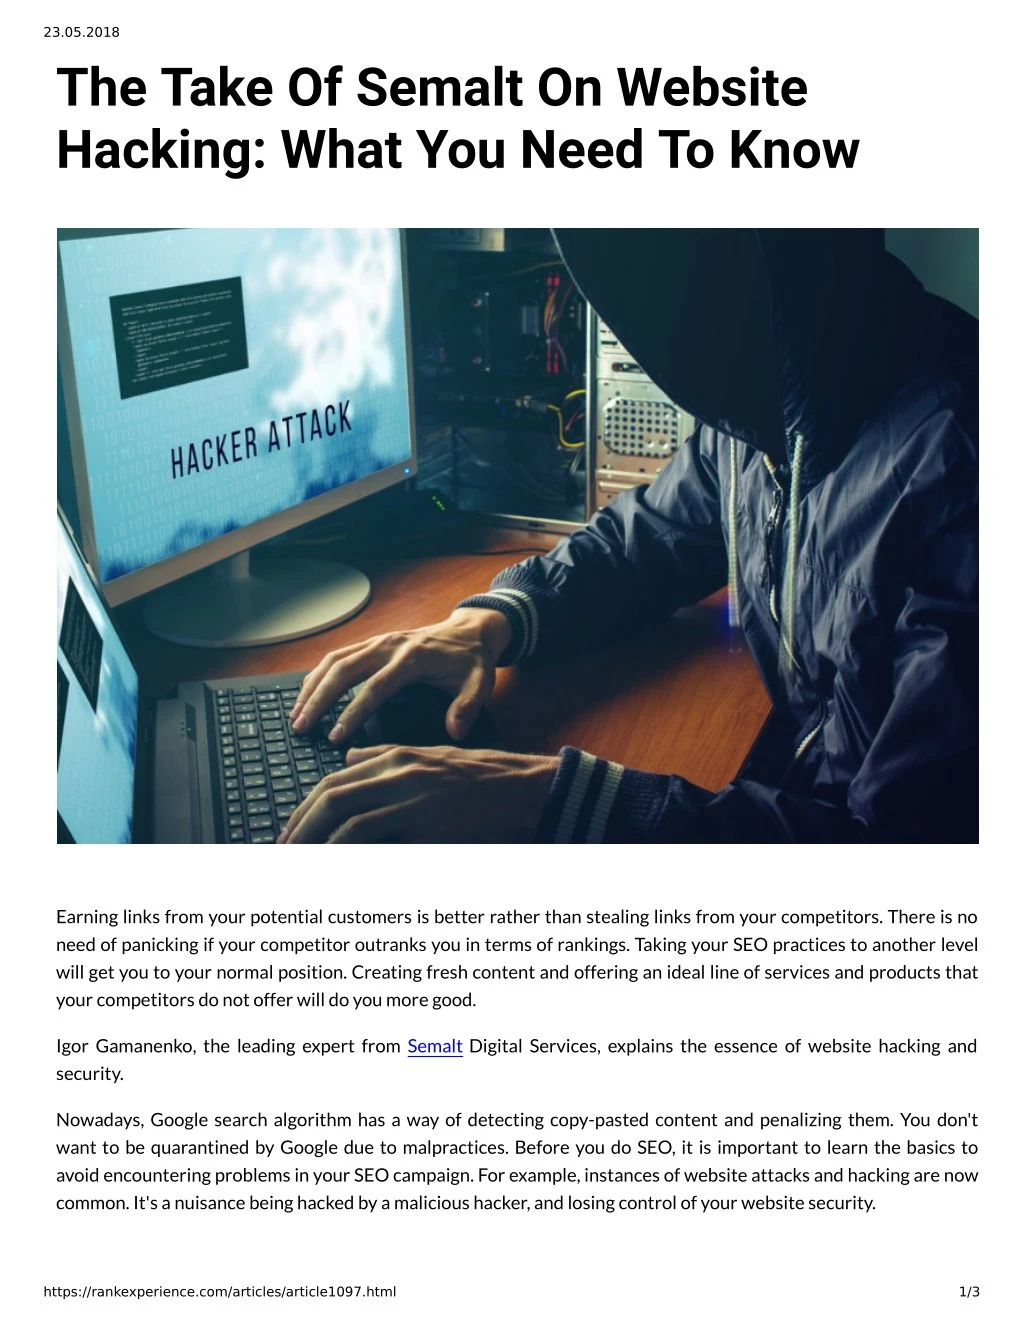 23 05 2018 the take of semalt on website hacking